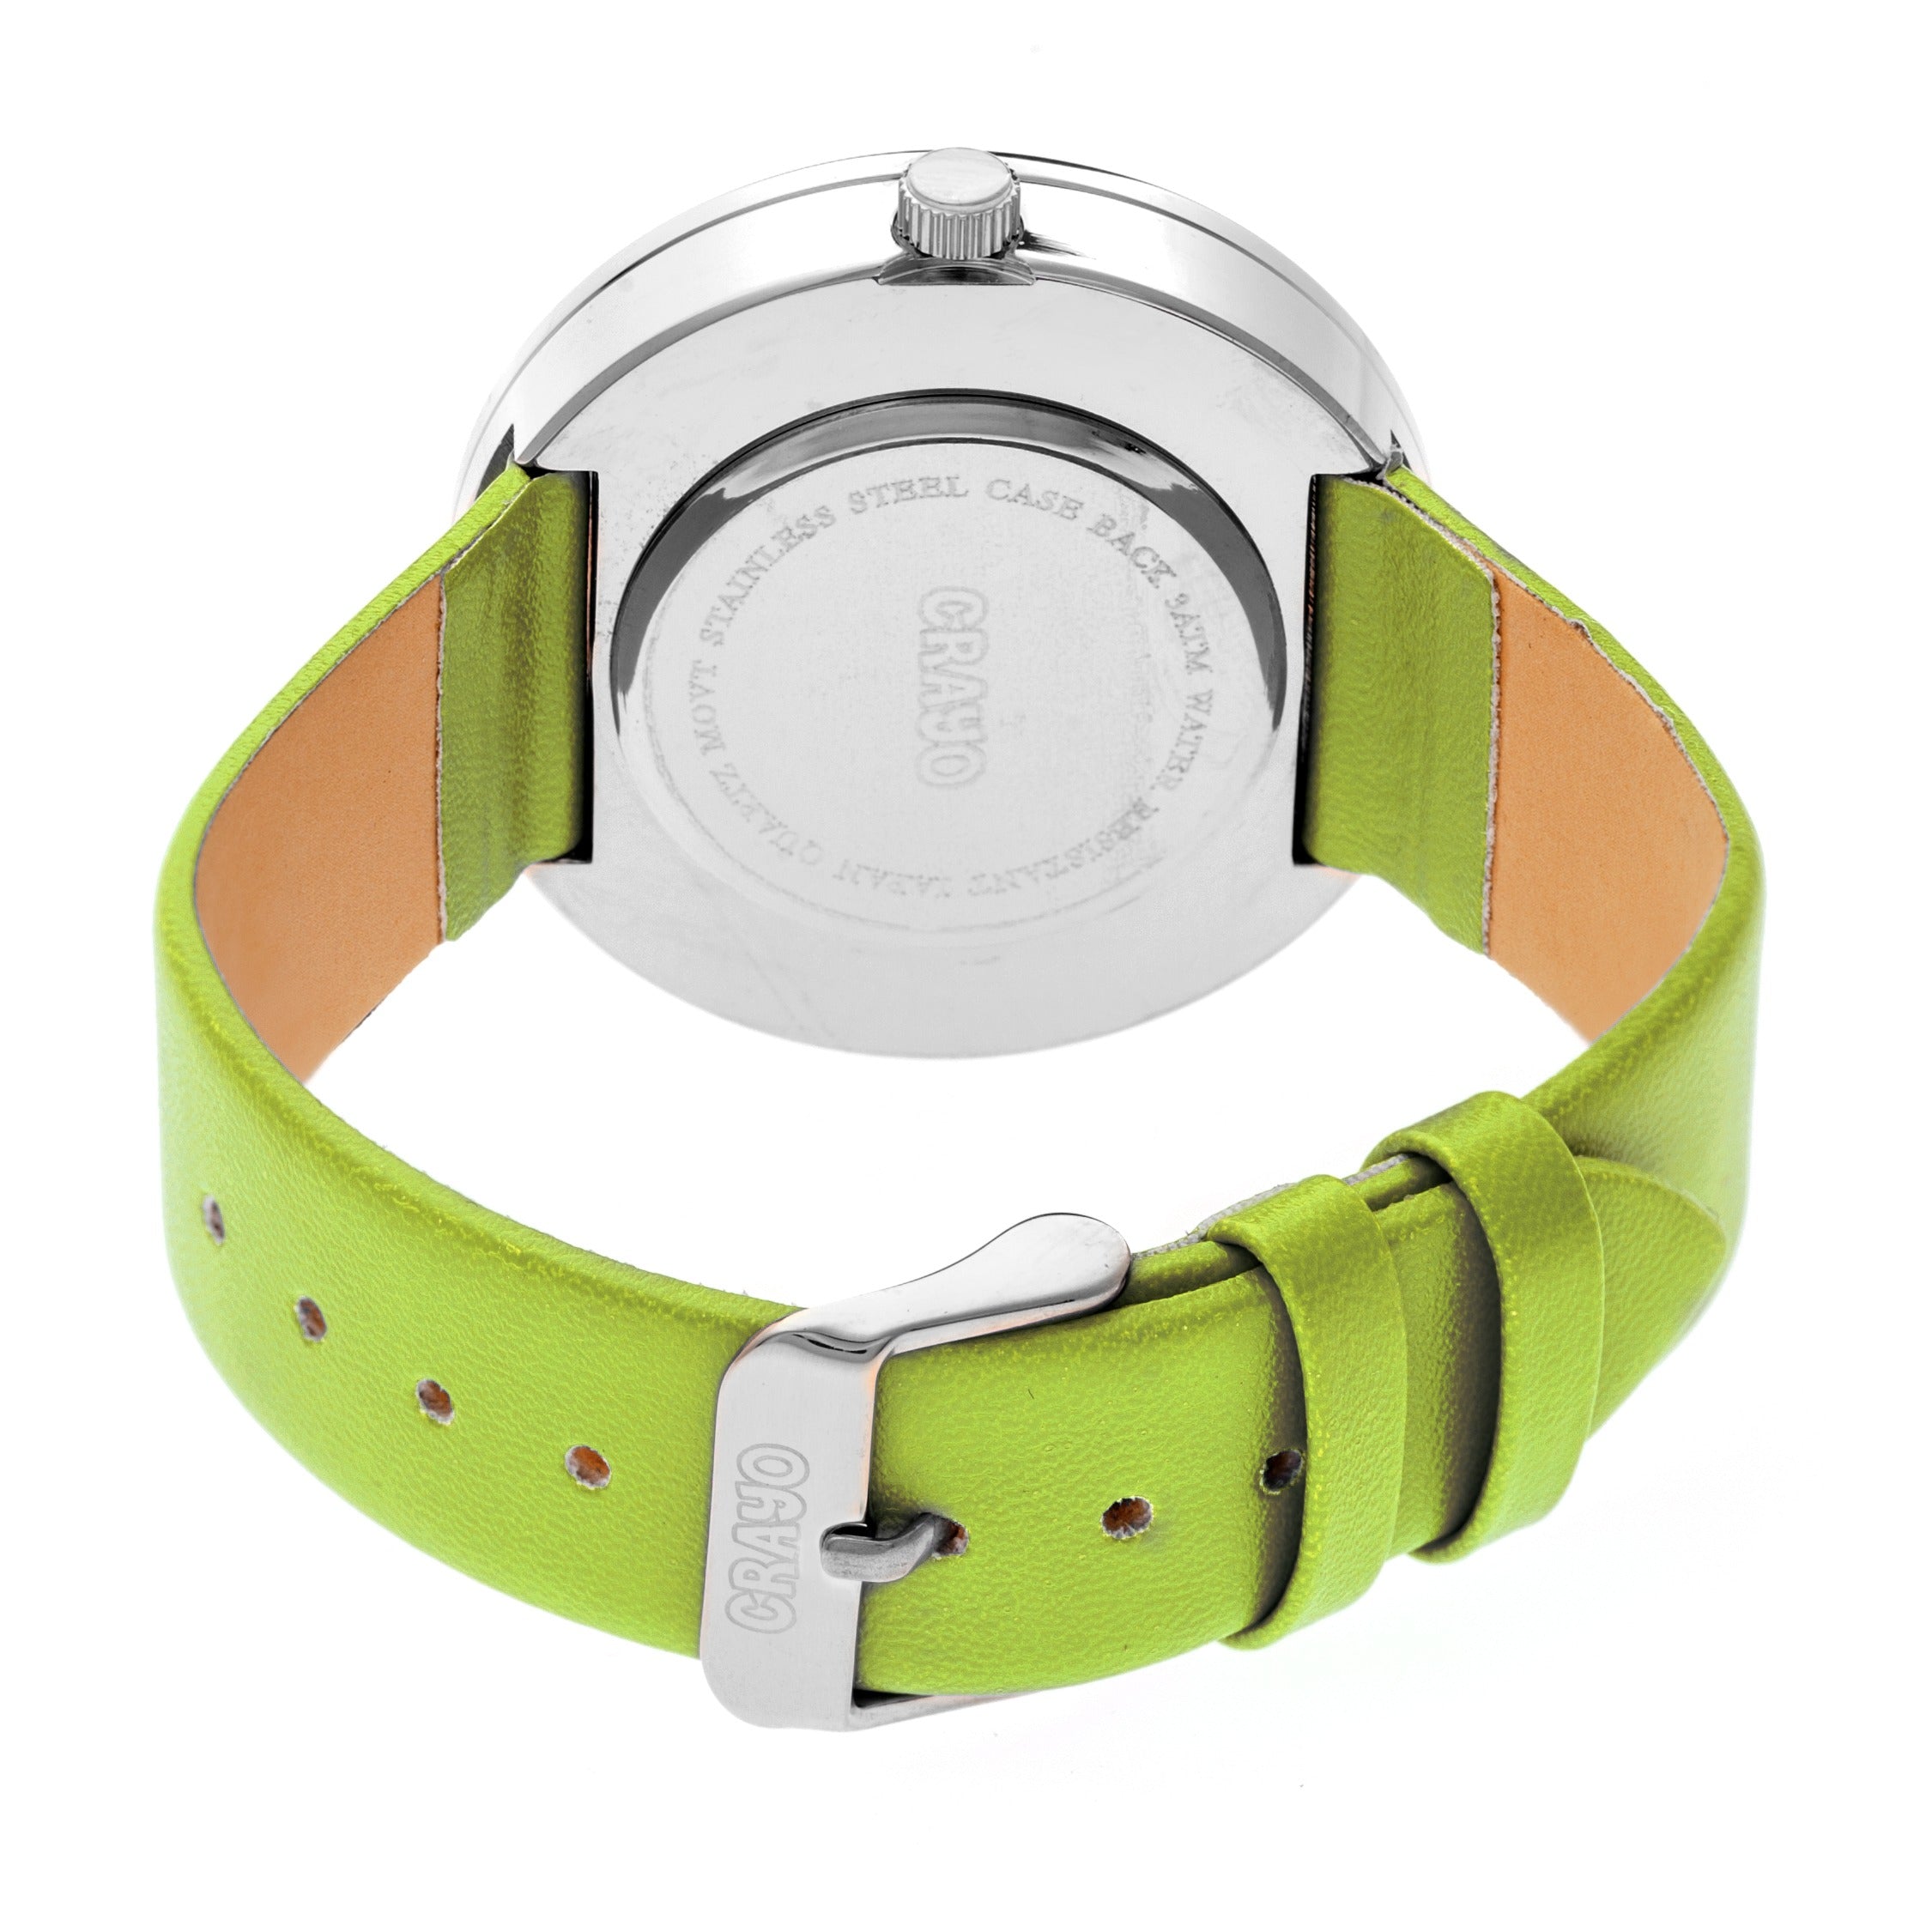 Crayo Swirl Unisex Watch - Silver/Green - CRACR4201